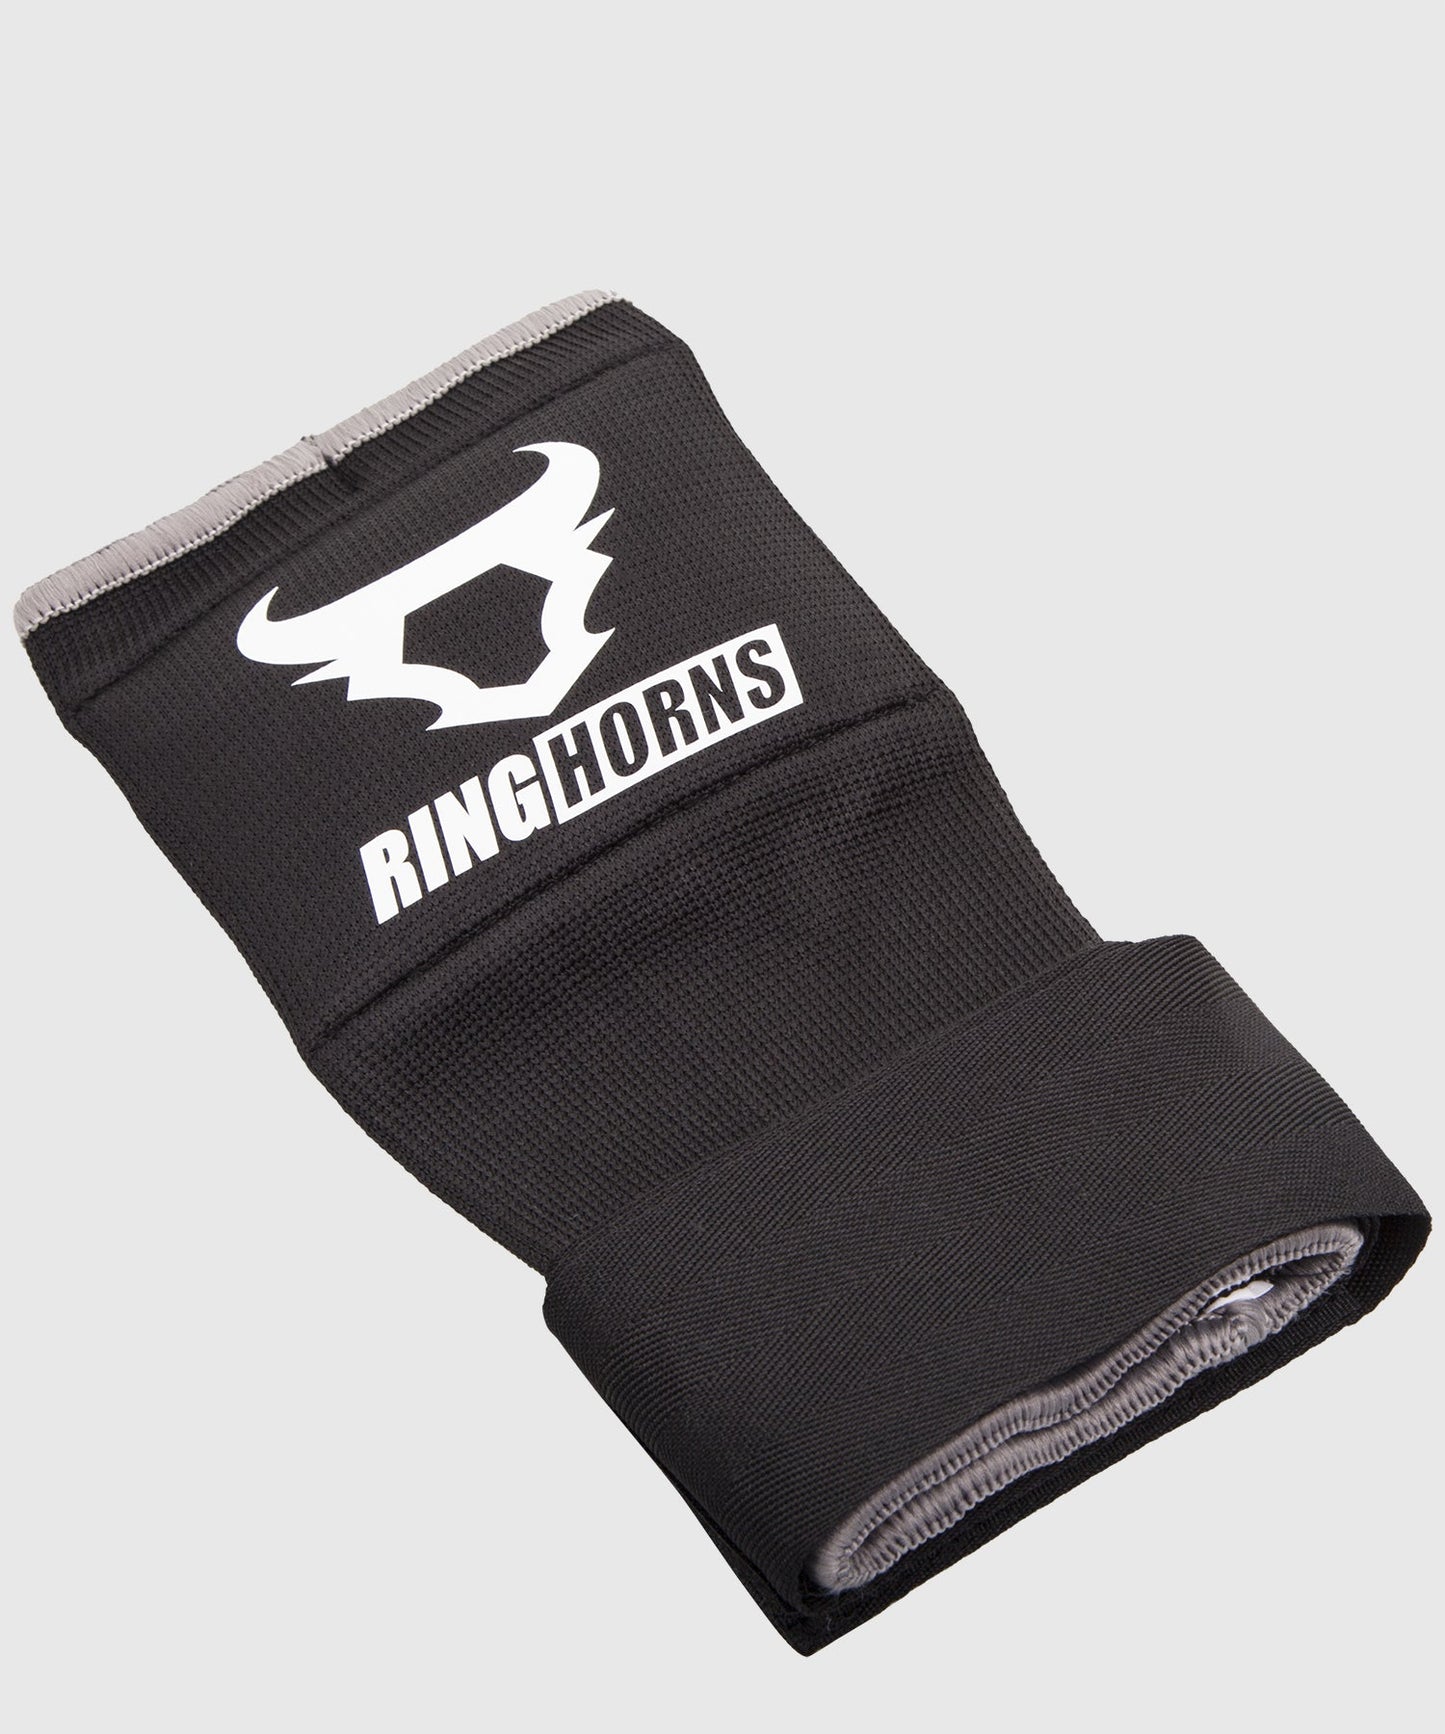 Ringhorns Charger Handwraps - Black